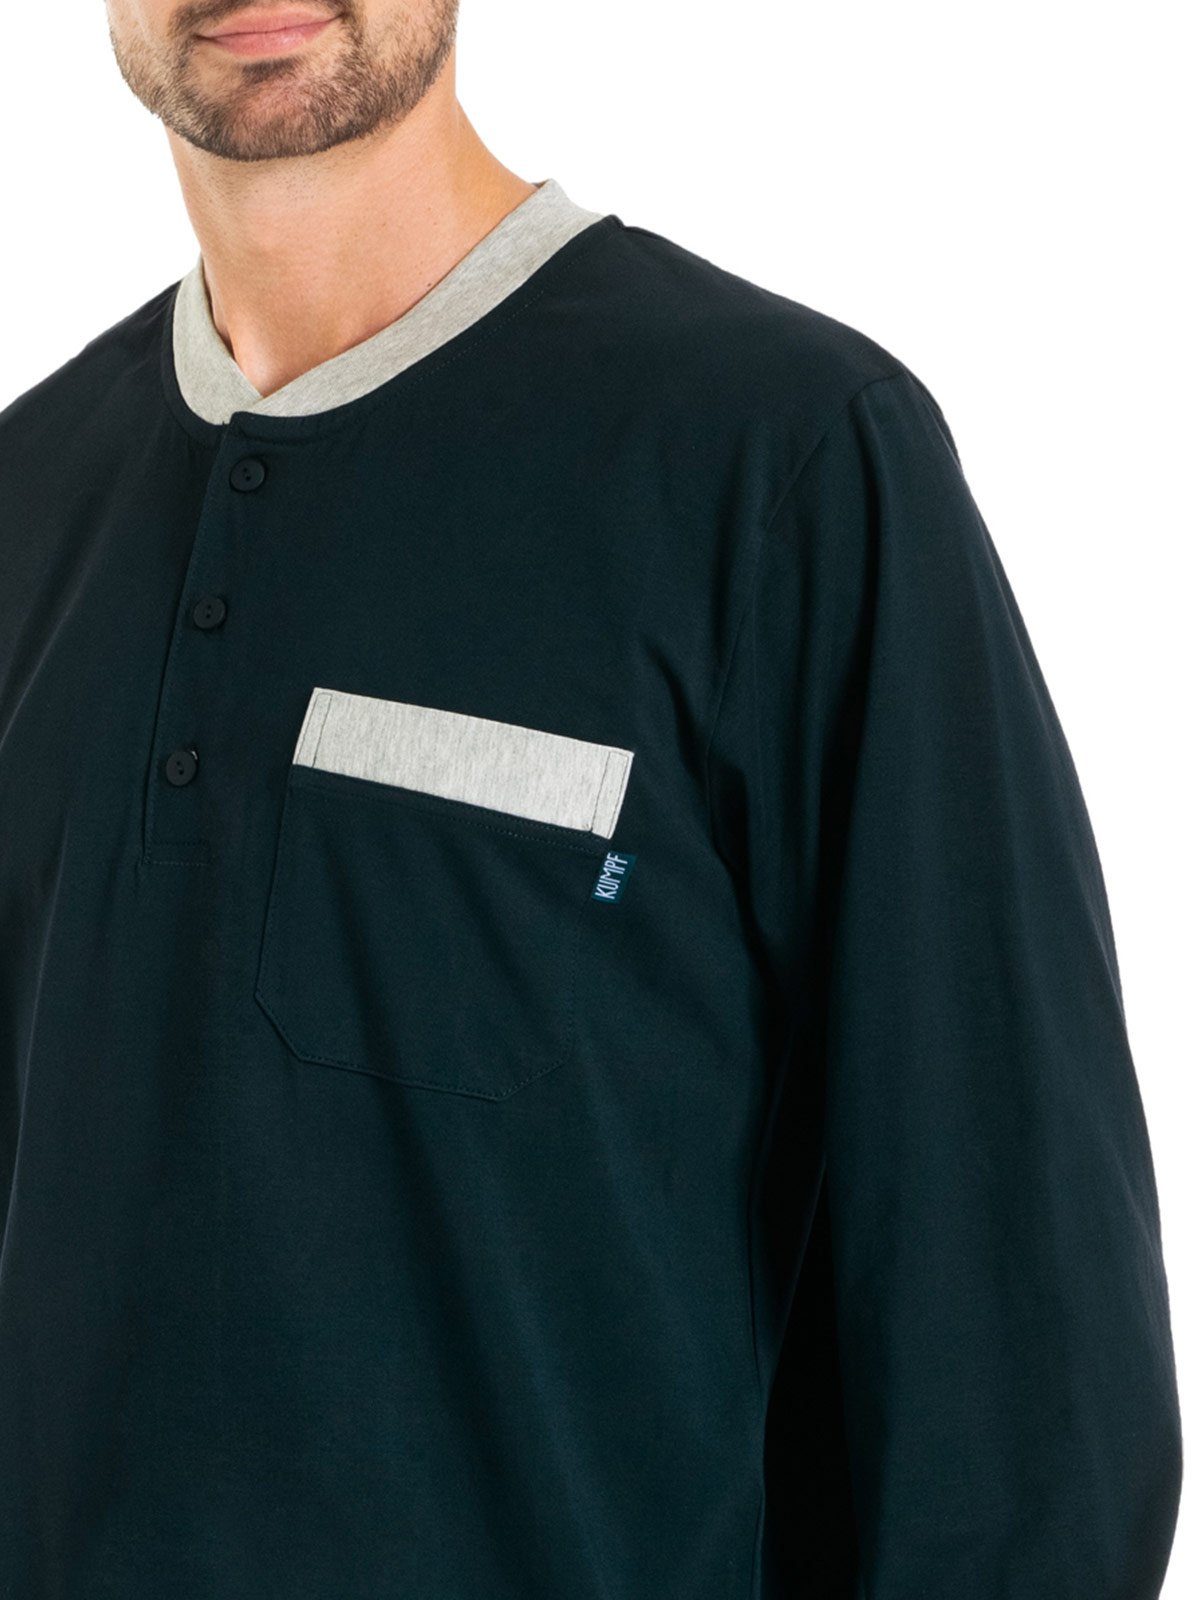 KUMPF Nachthemd langarm (Stück, - navy Bio Herren 1-tlg) Nachthemd Cotton